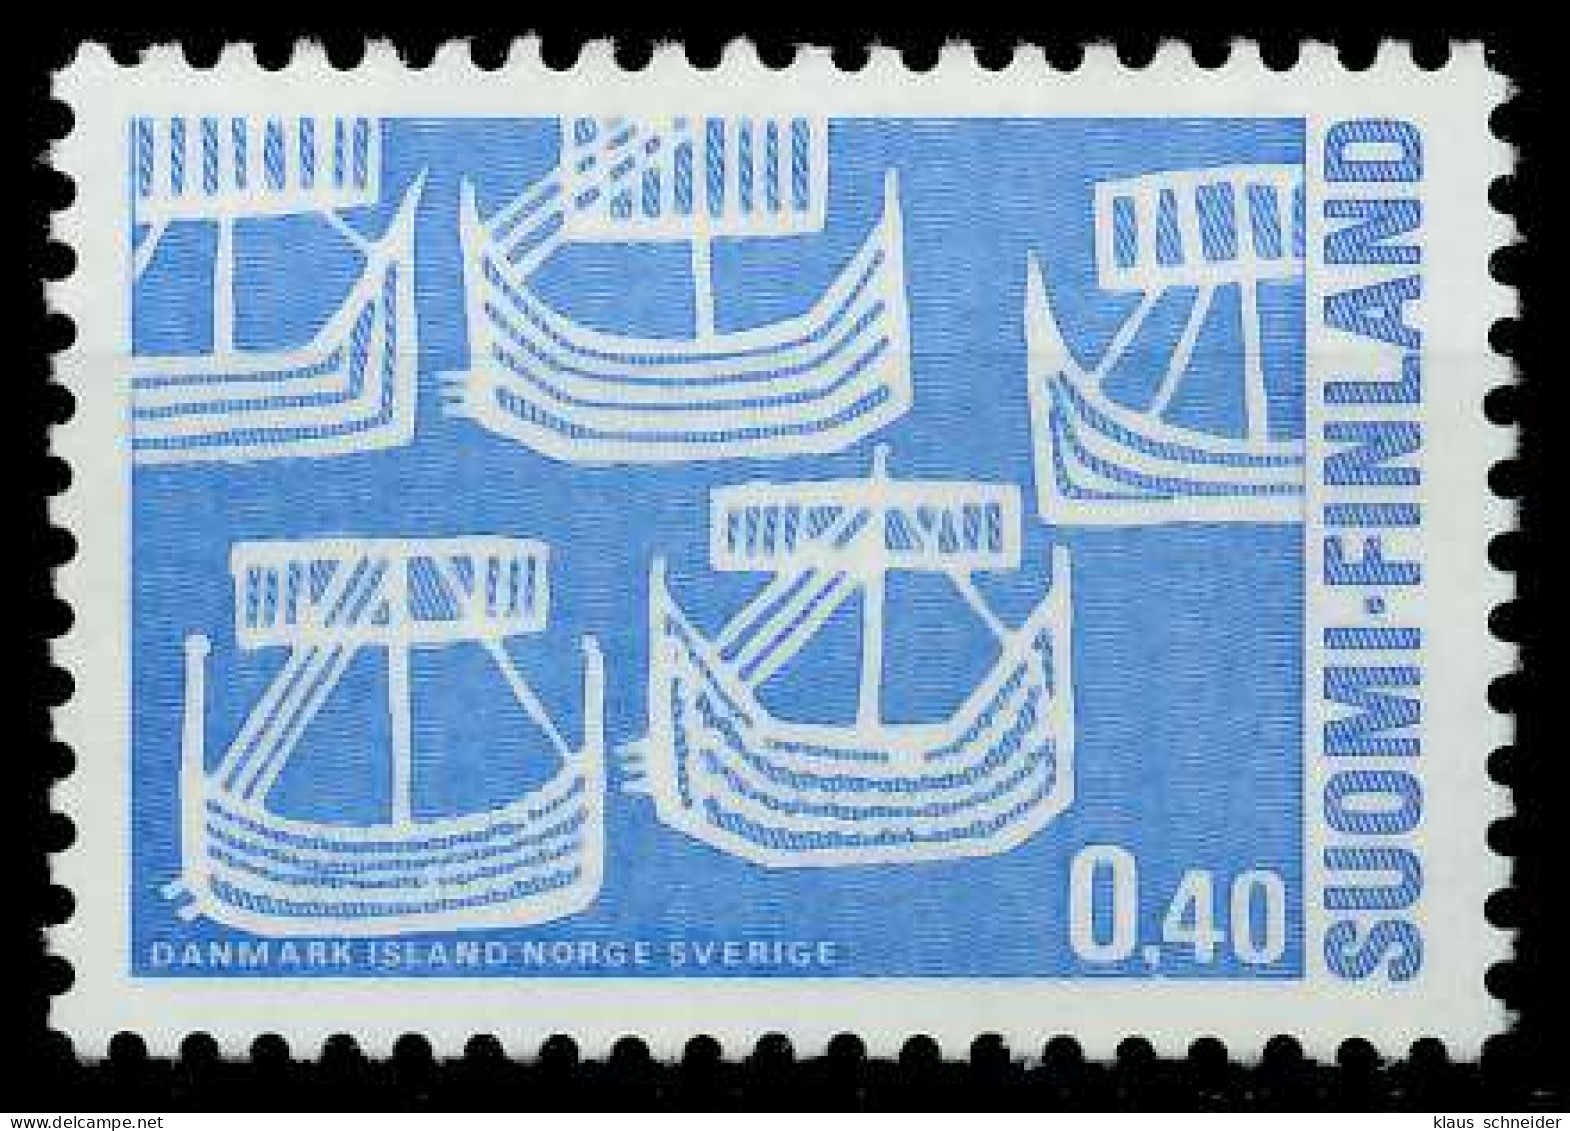 FINNLAND 1969 Nr 654 Postfrisch SB041FA - Nuovi